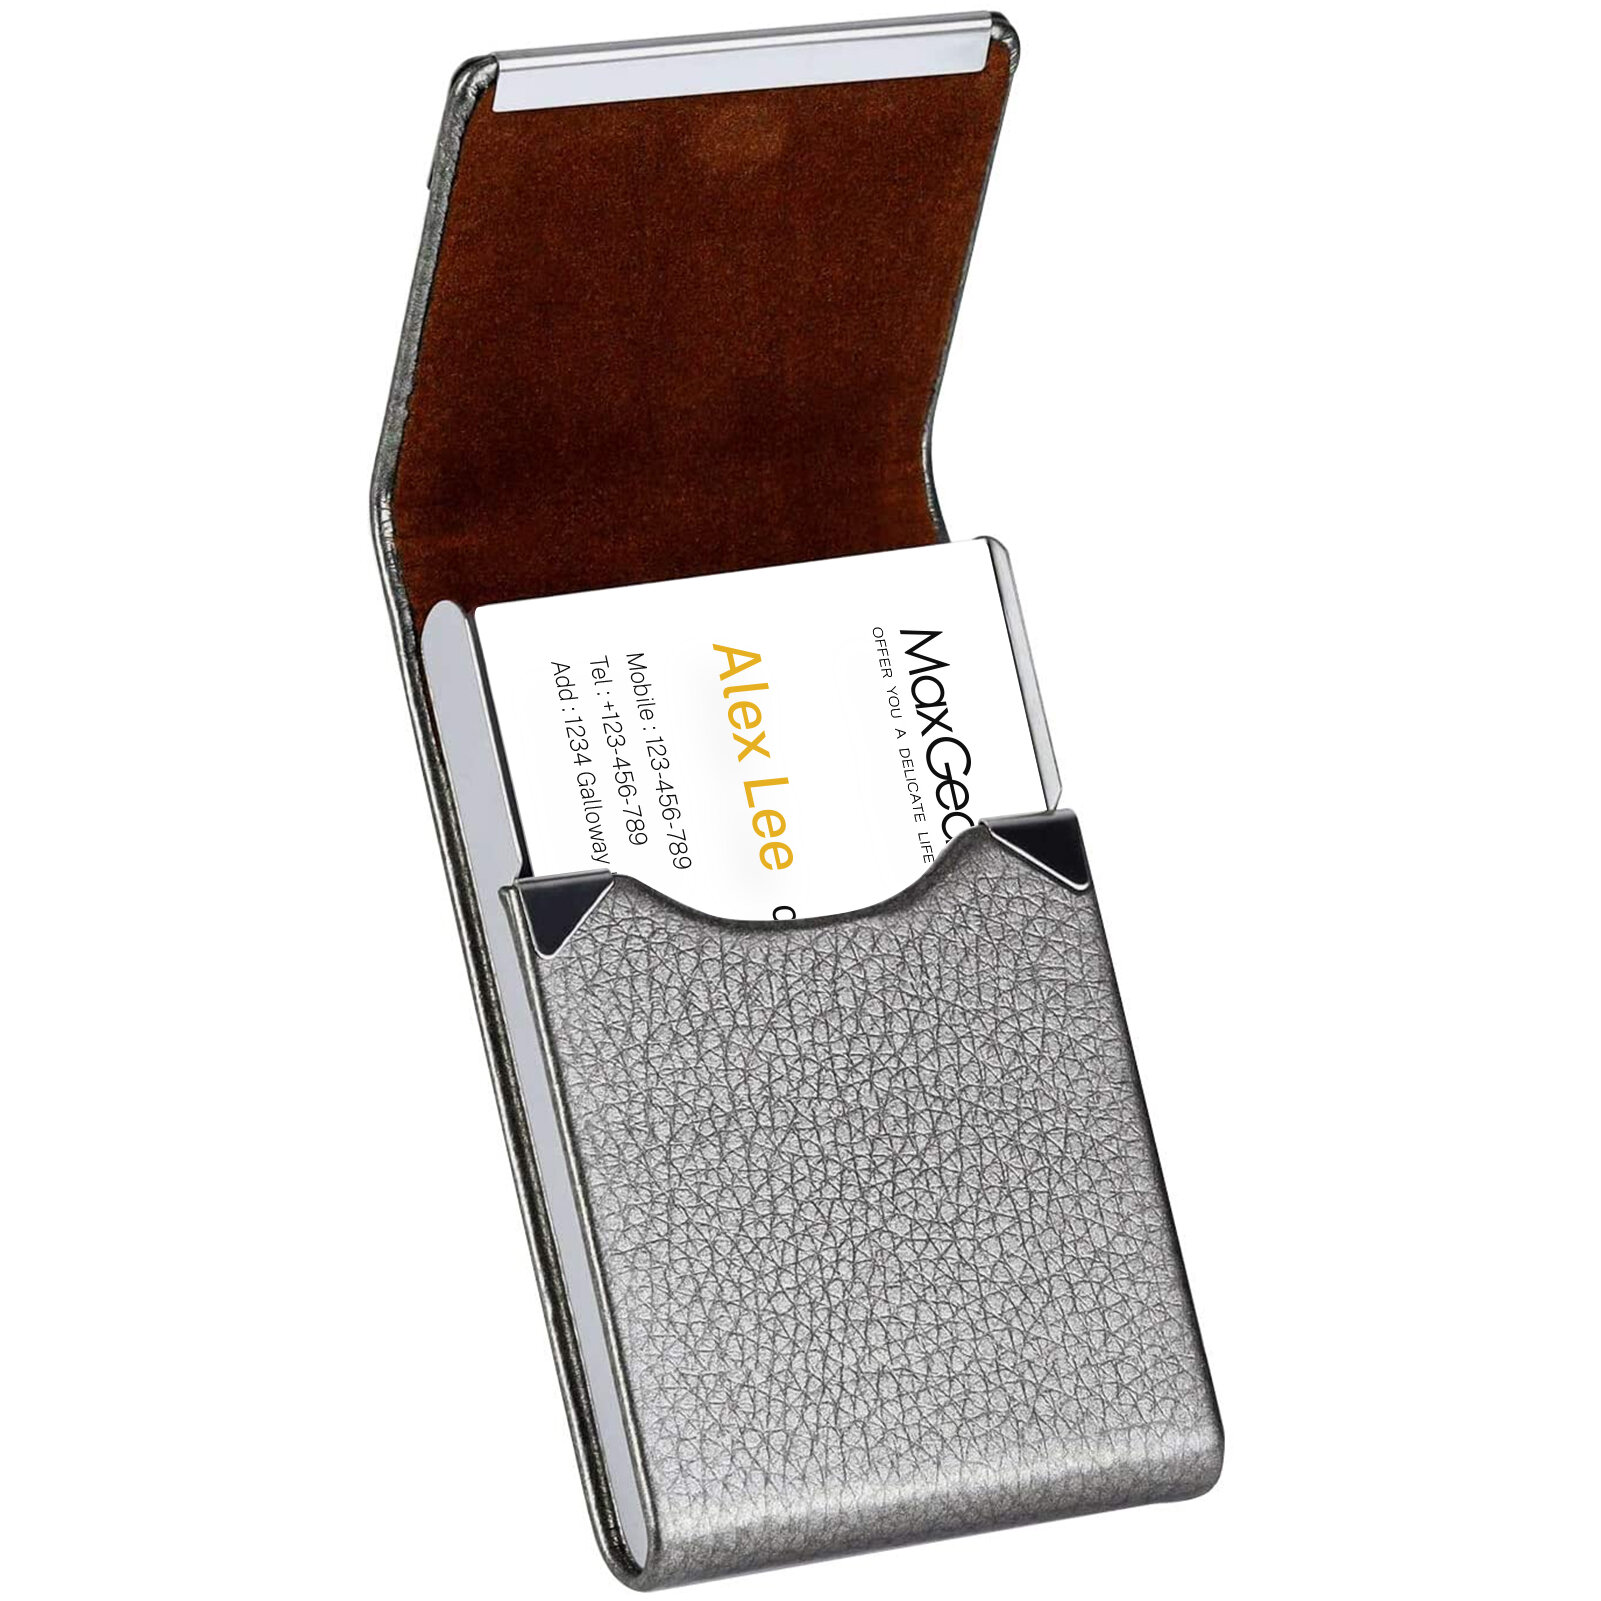 Steel Credit Card Holder Business Card Name Cards Case RFID Block Protector Case